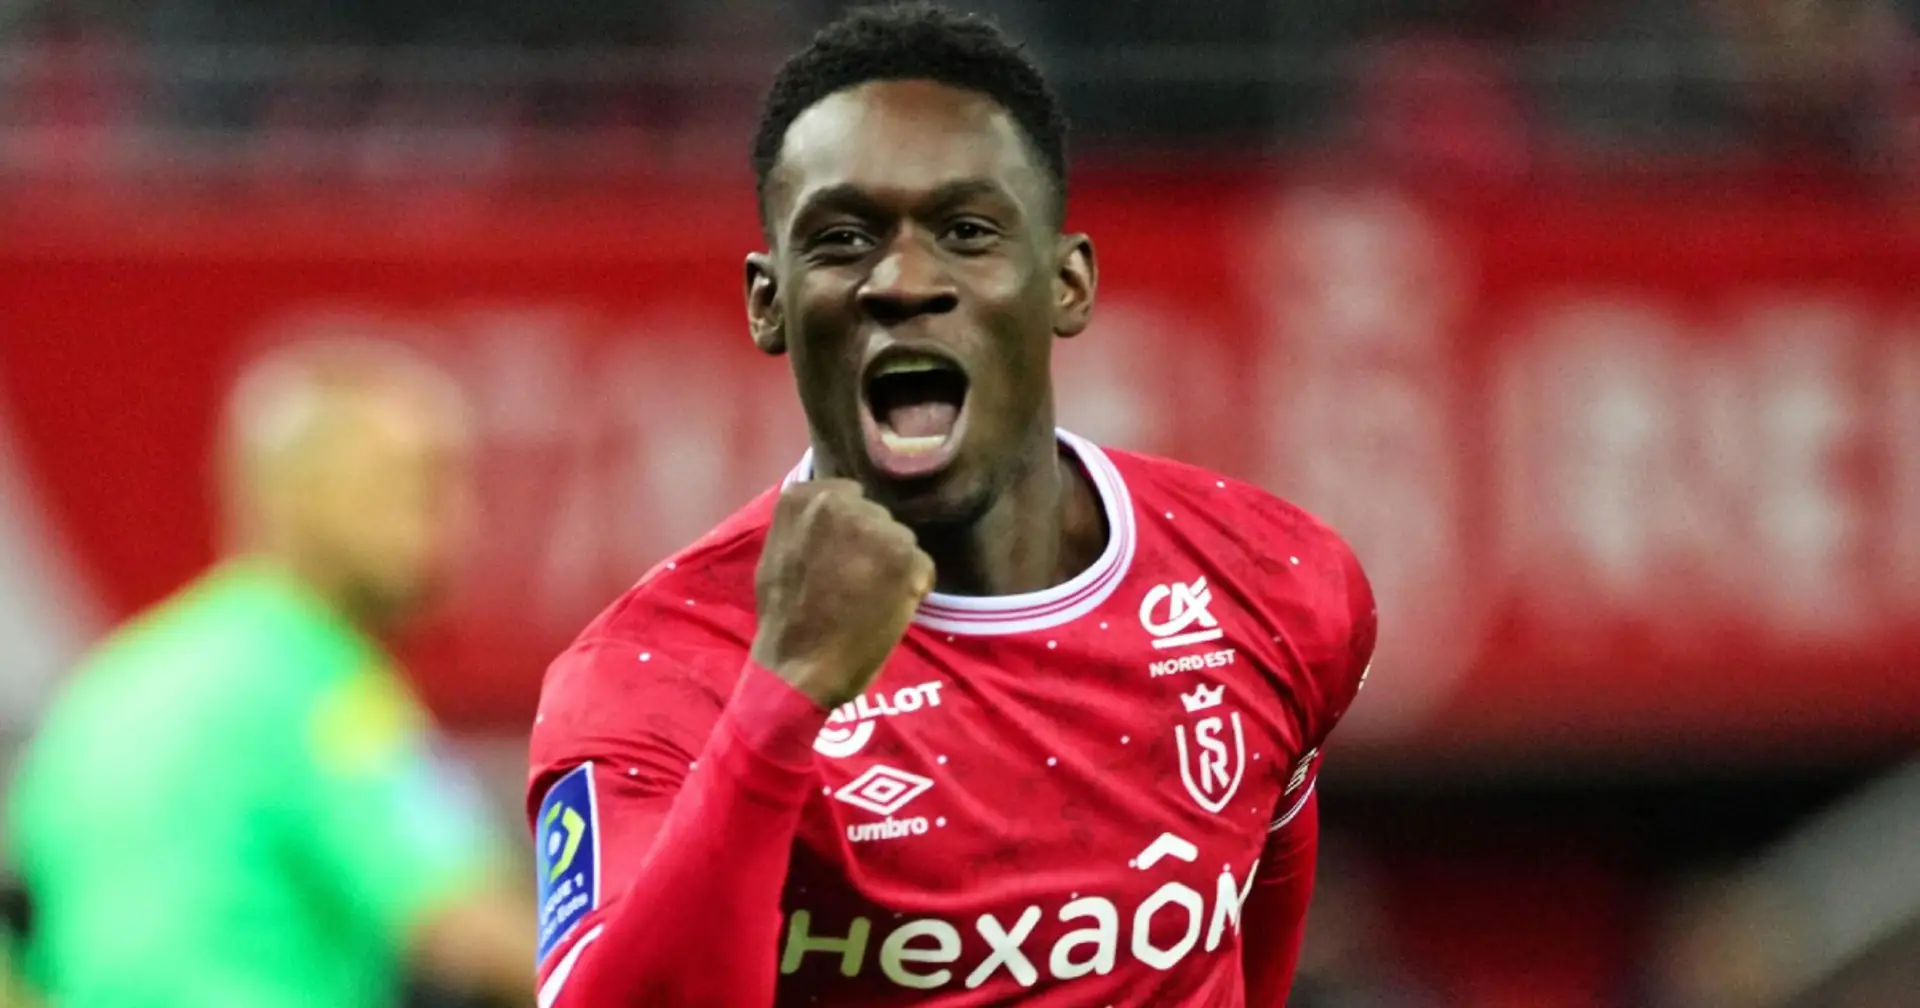 Folarin Balogun named among top 5 breakout stars in Ligue 1